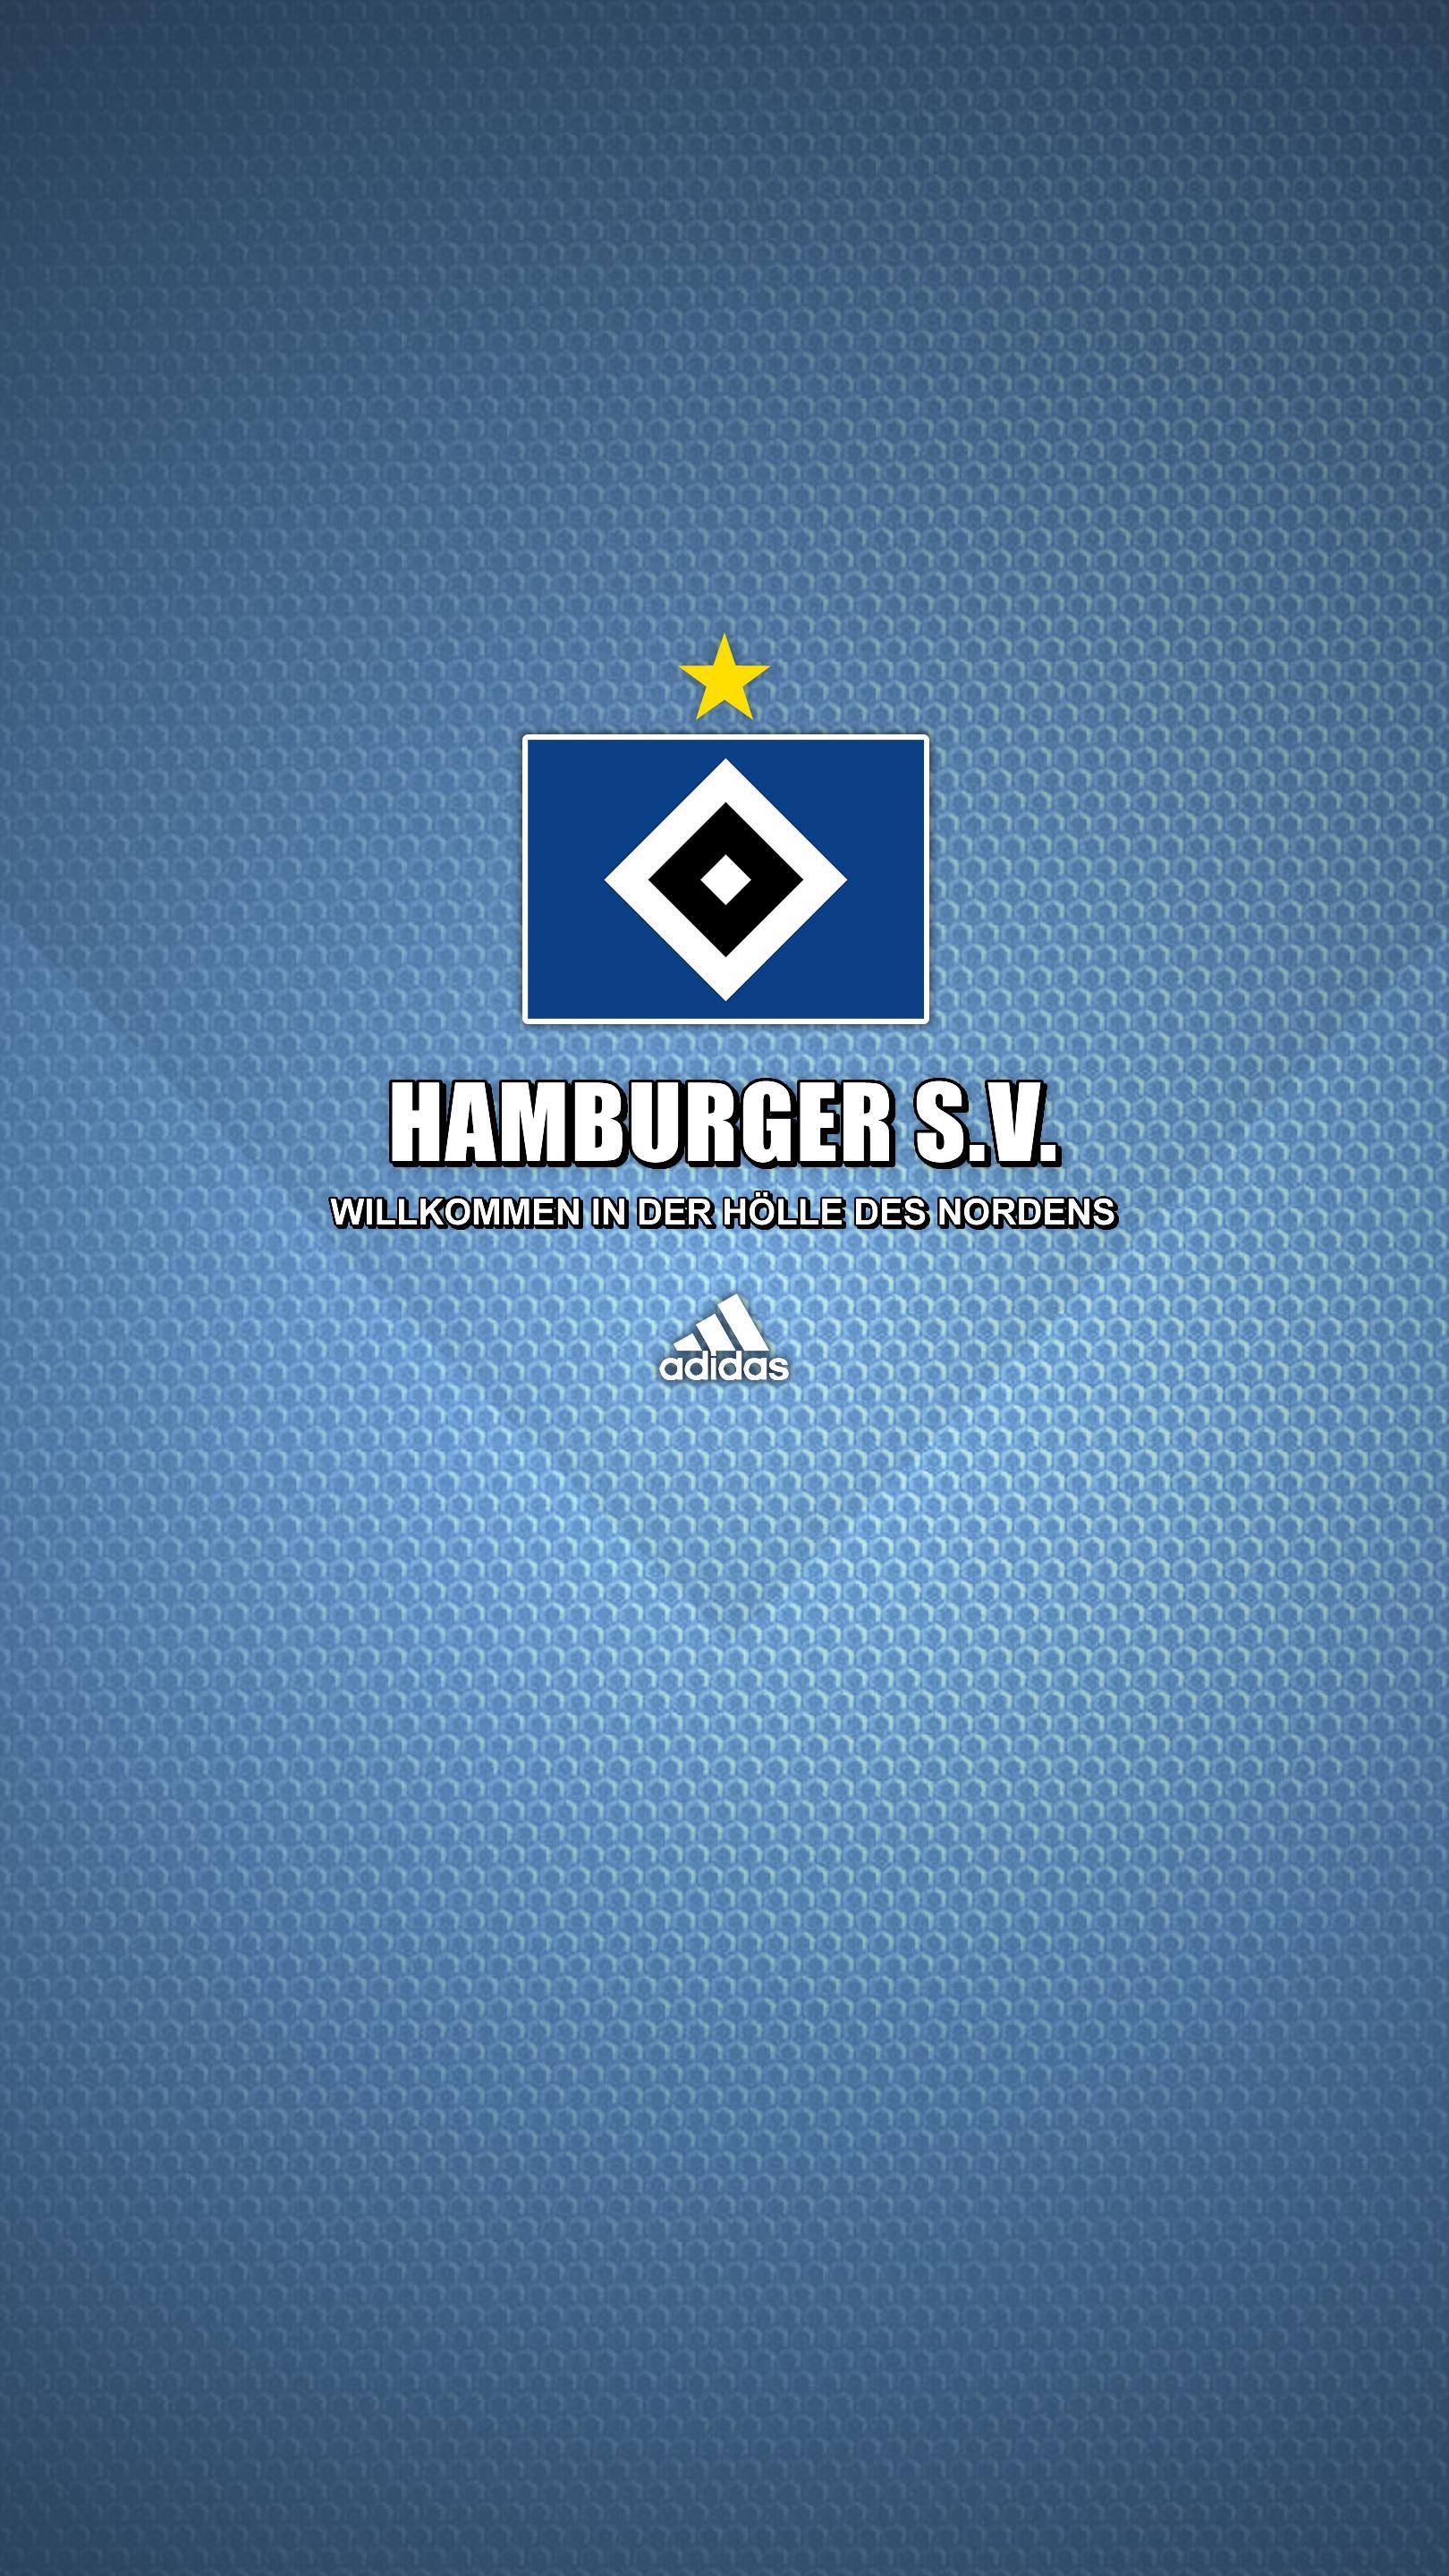 Samsung Hamburger SV Wallpaper. Full HD Picture